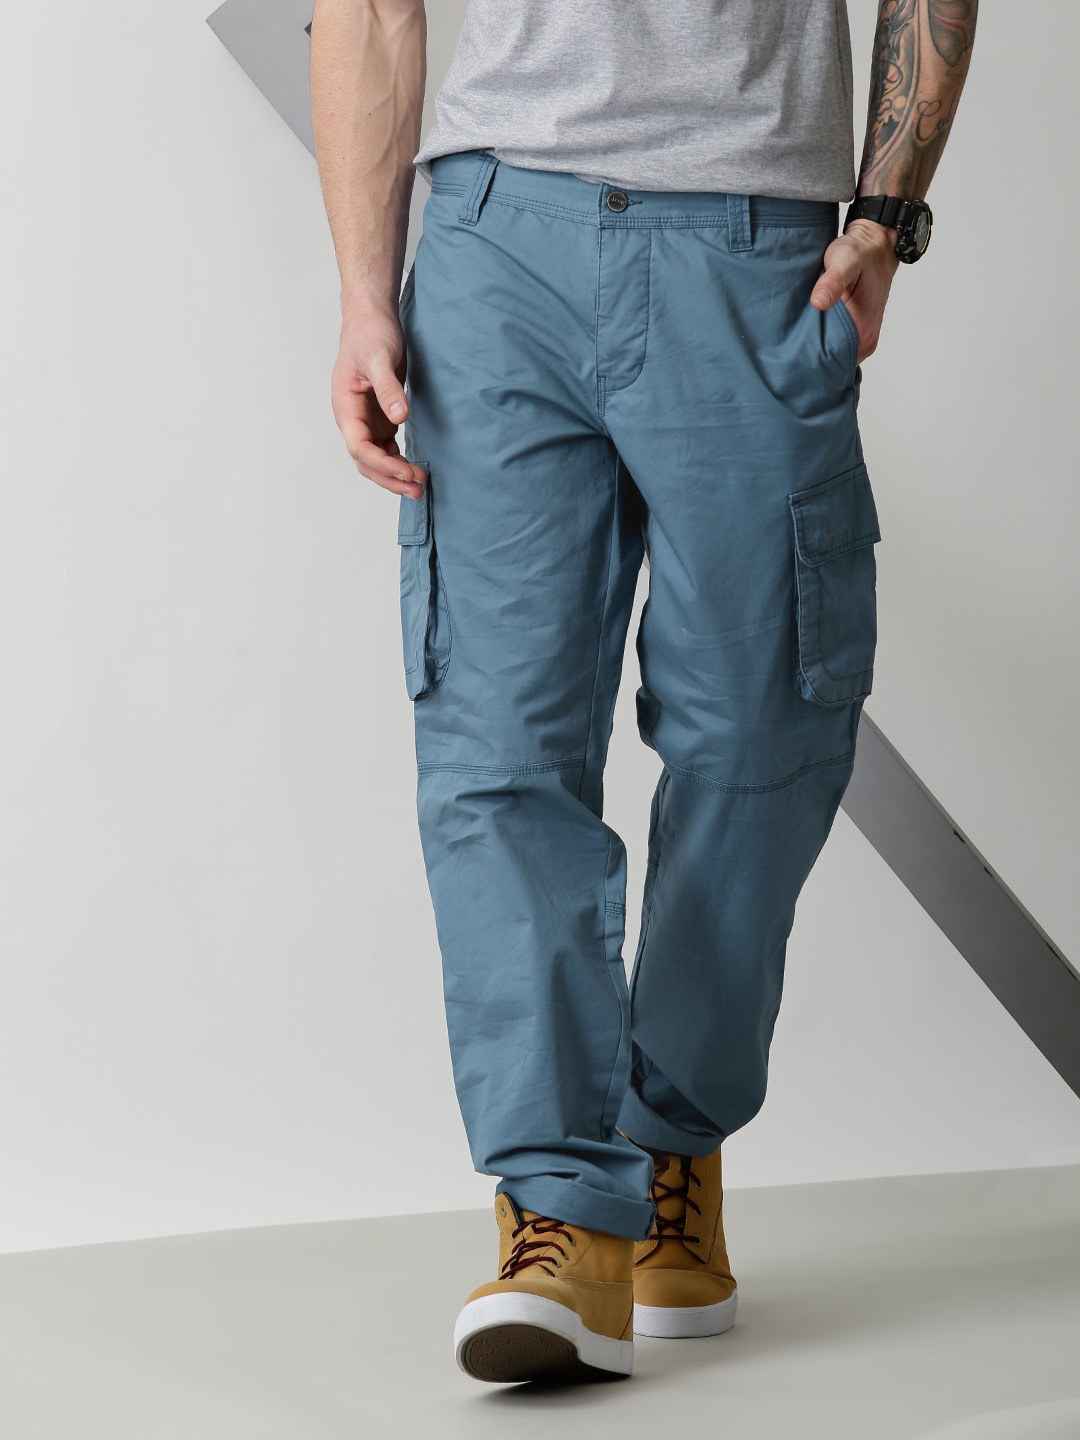 Buy Plus Size Cargo Pants For Men  Big Size Mens Cargo Trousers  Apella